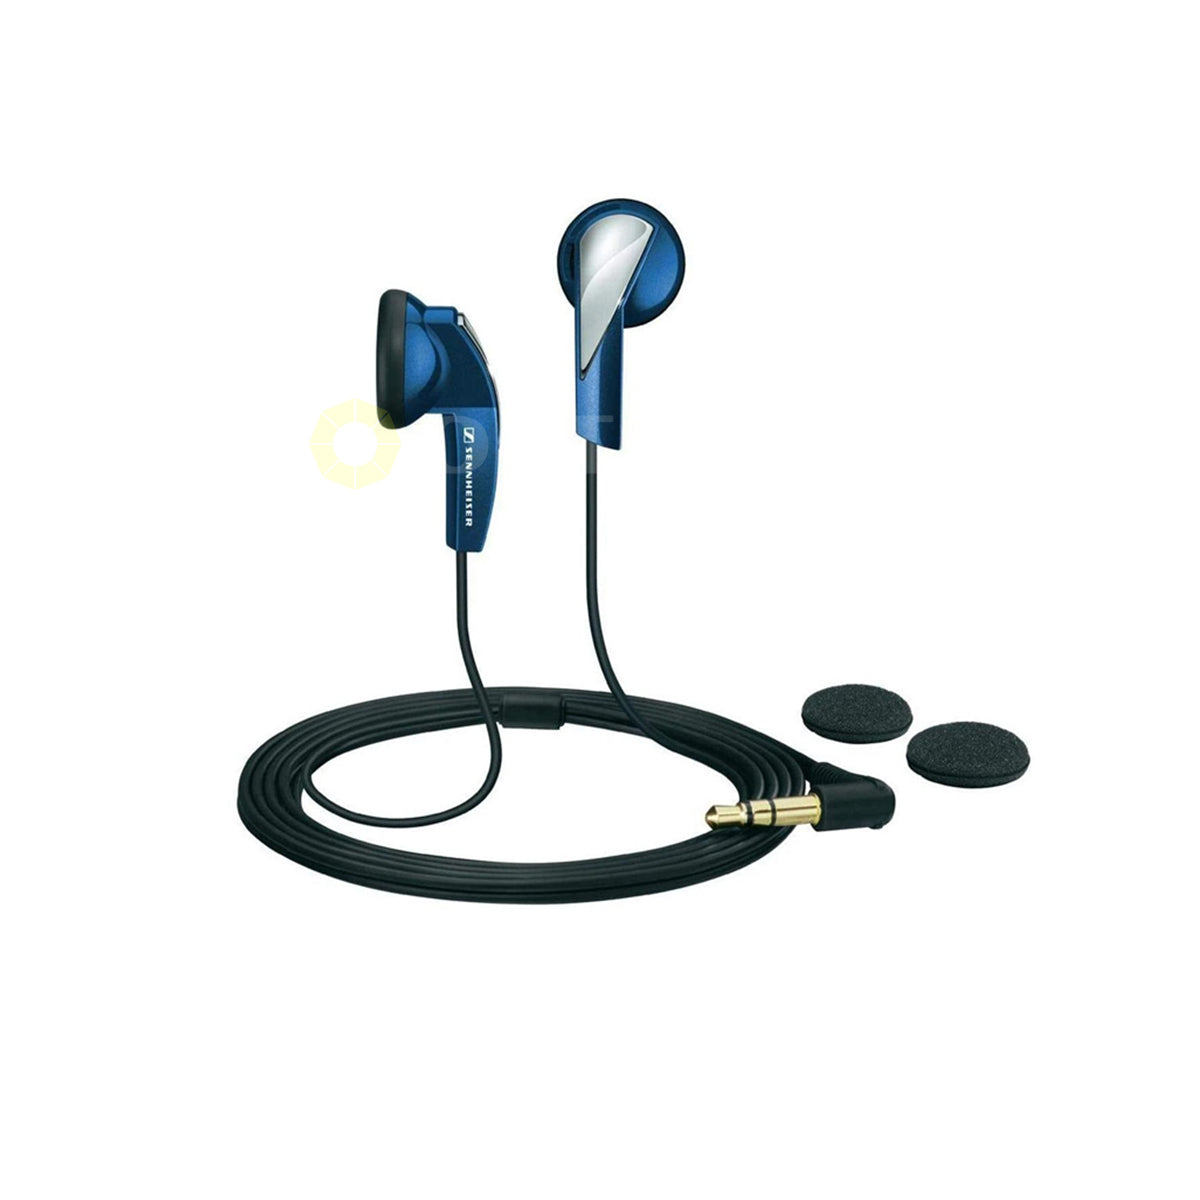 SENNHEISER MX365 BLUE IN-EAR EARPHONE